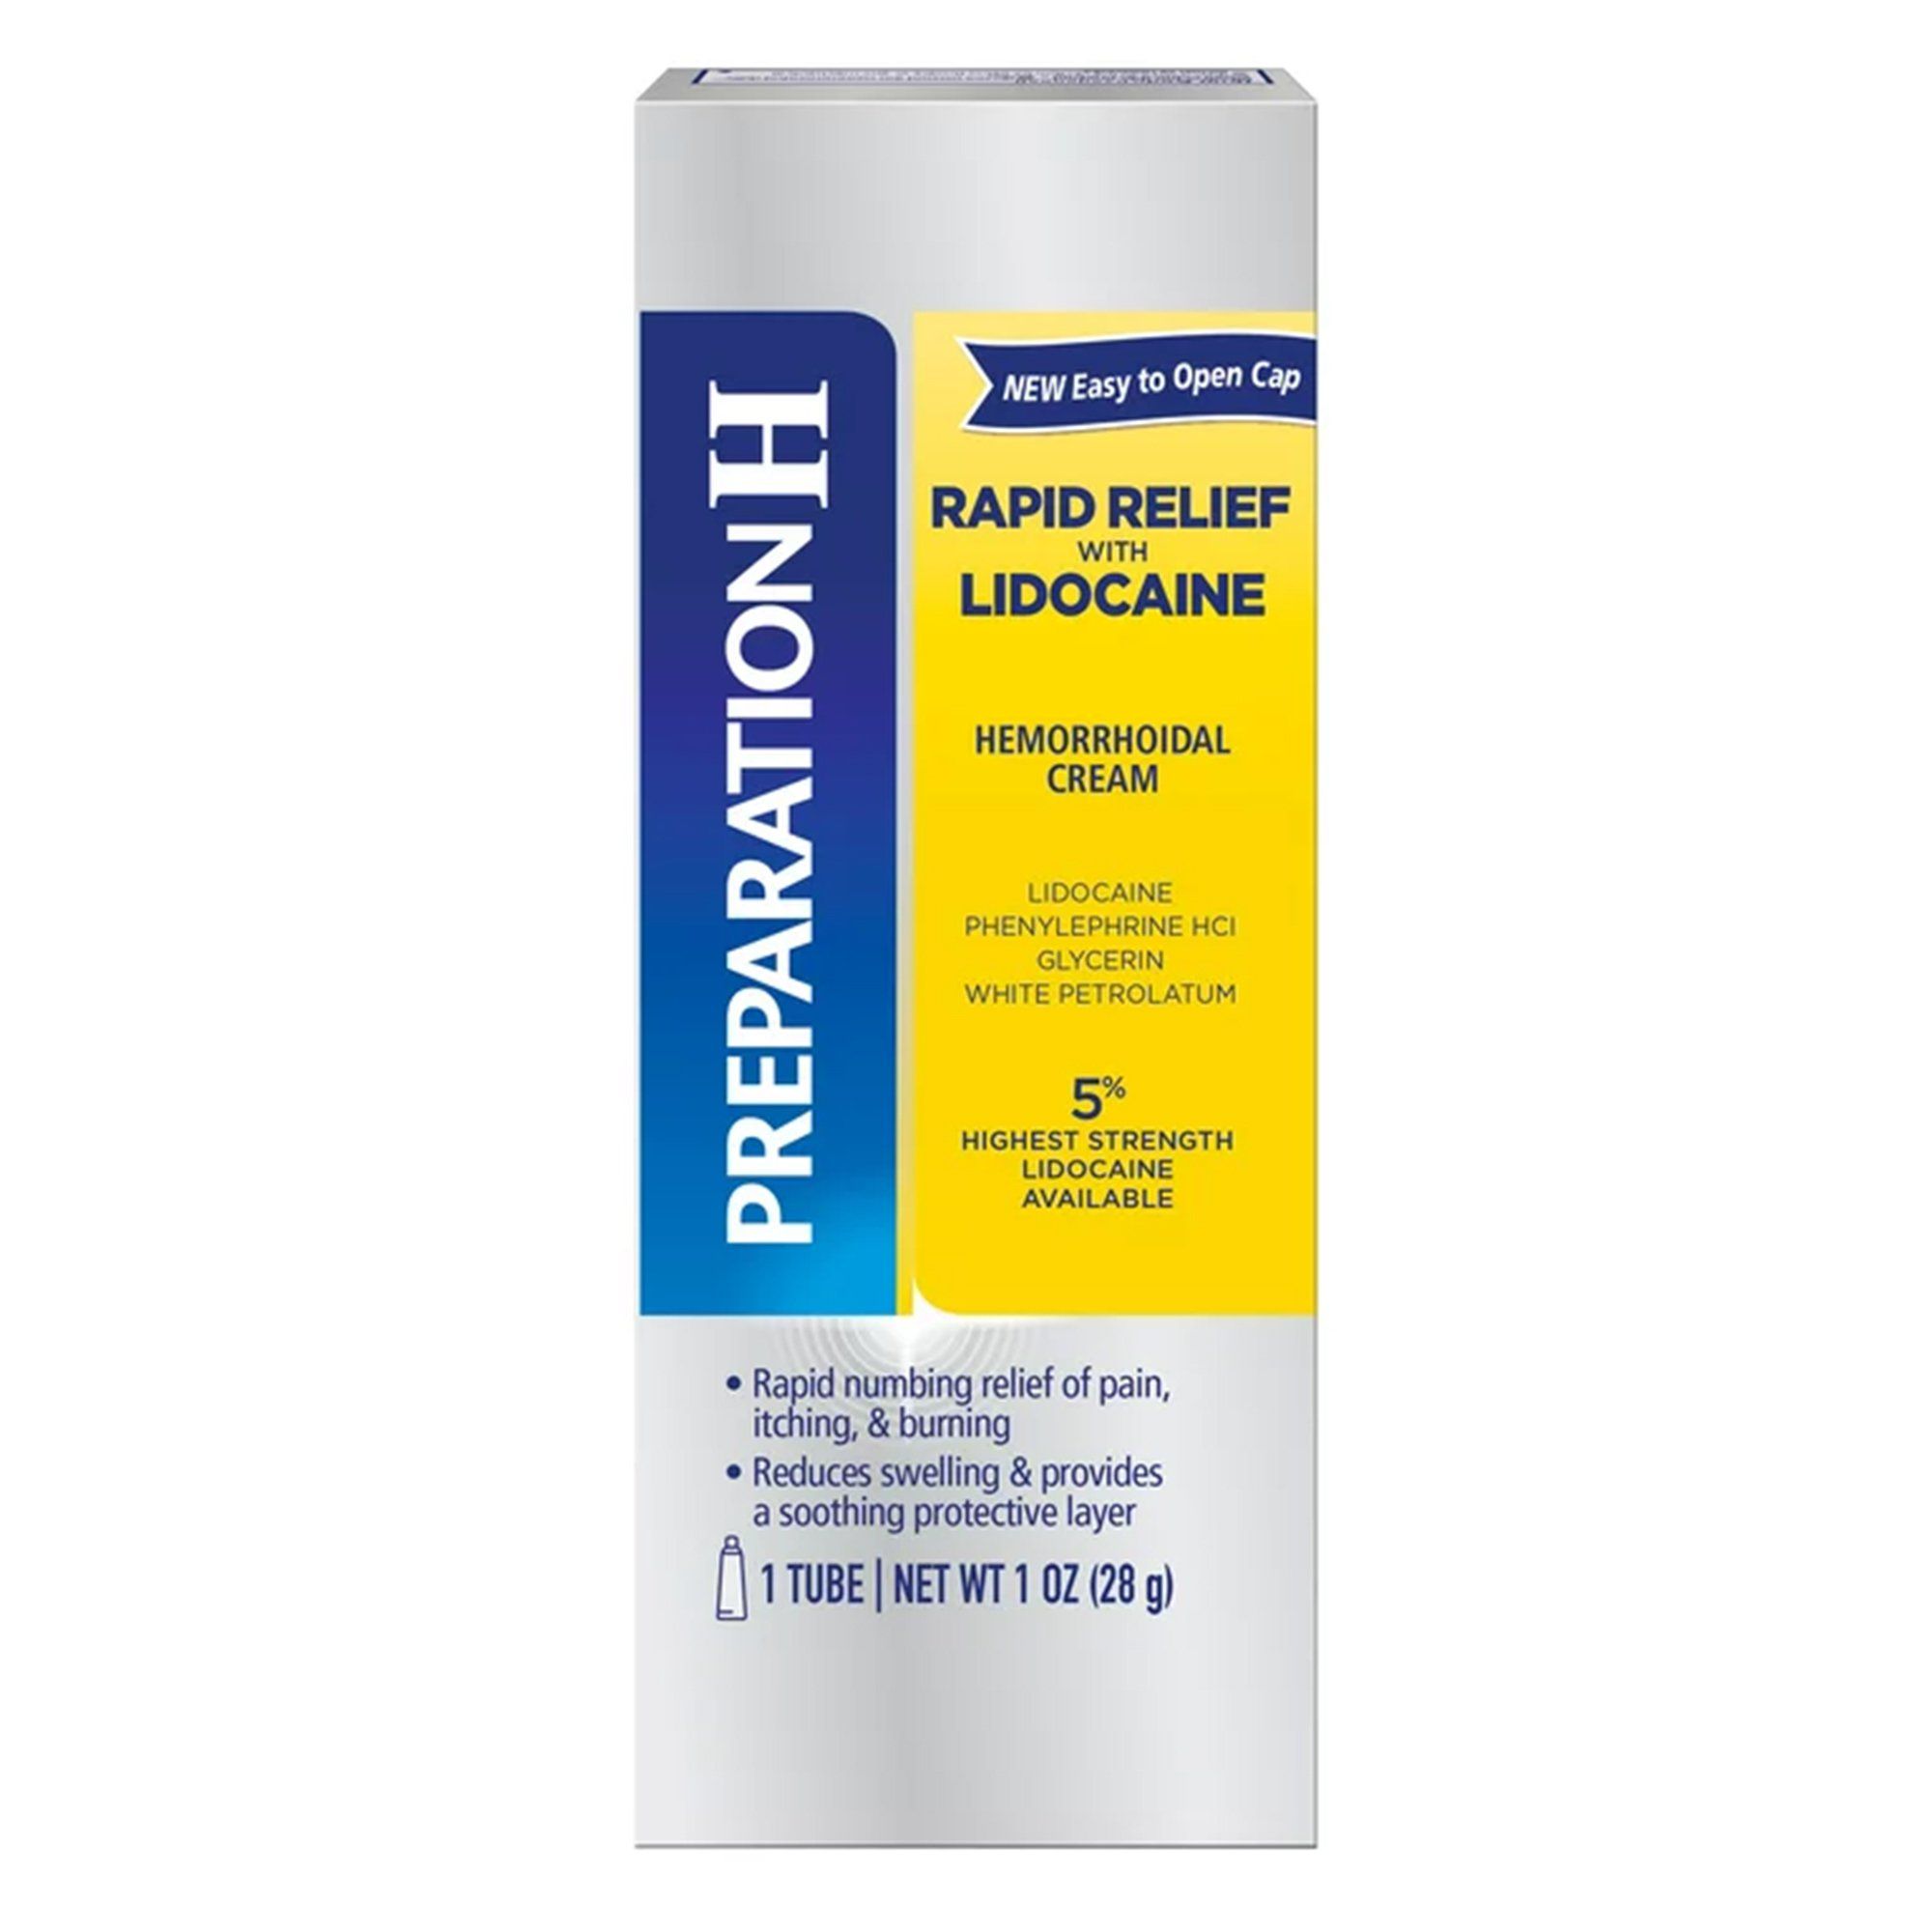 Preparation H Rapid Relief Hemorrhoid Cream with Lidocaine - 1 oz